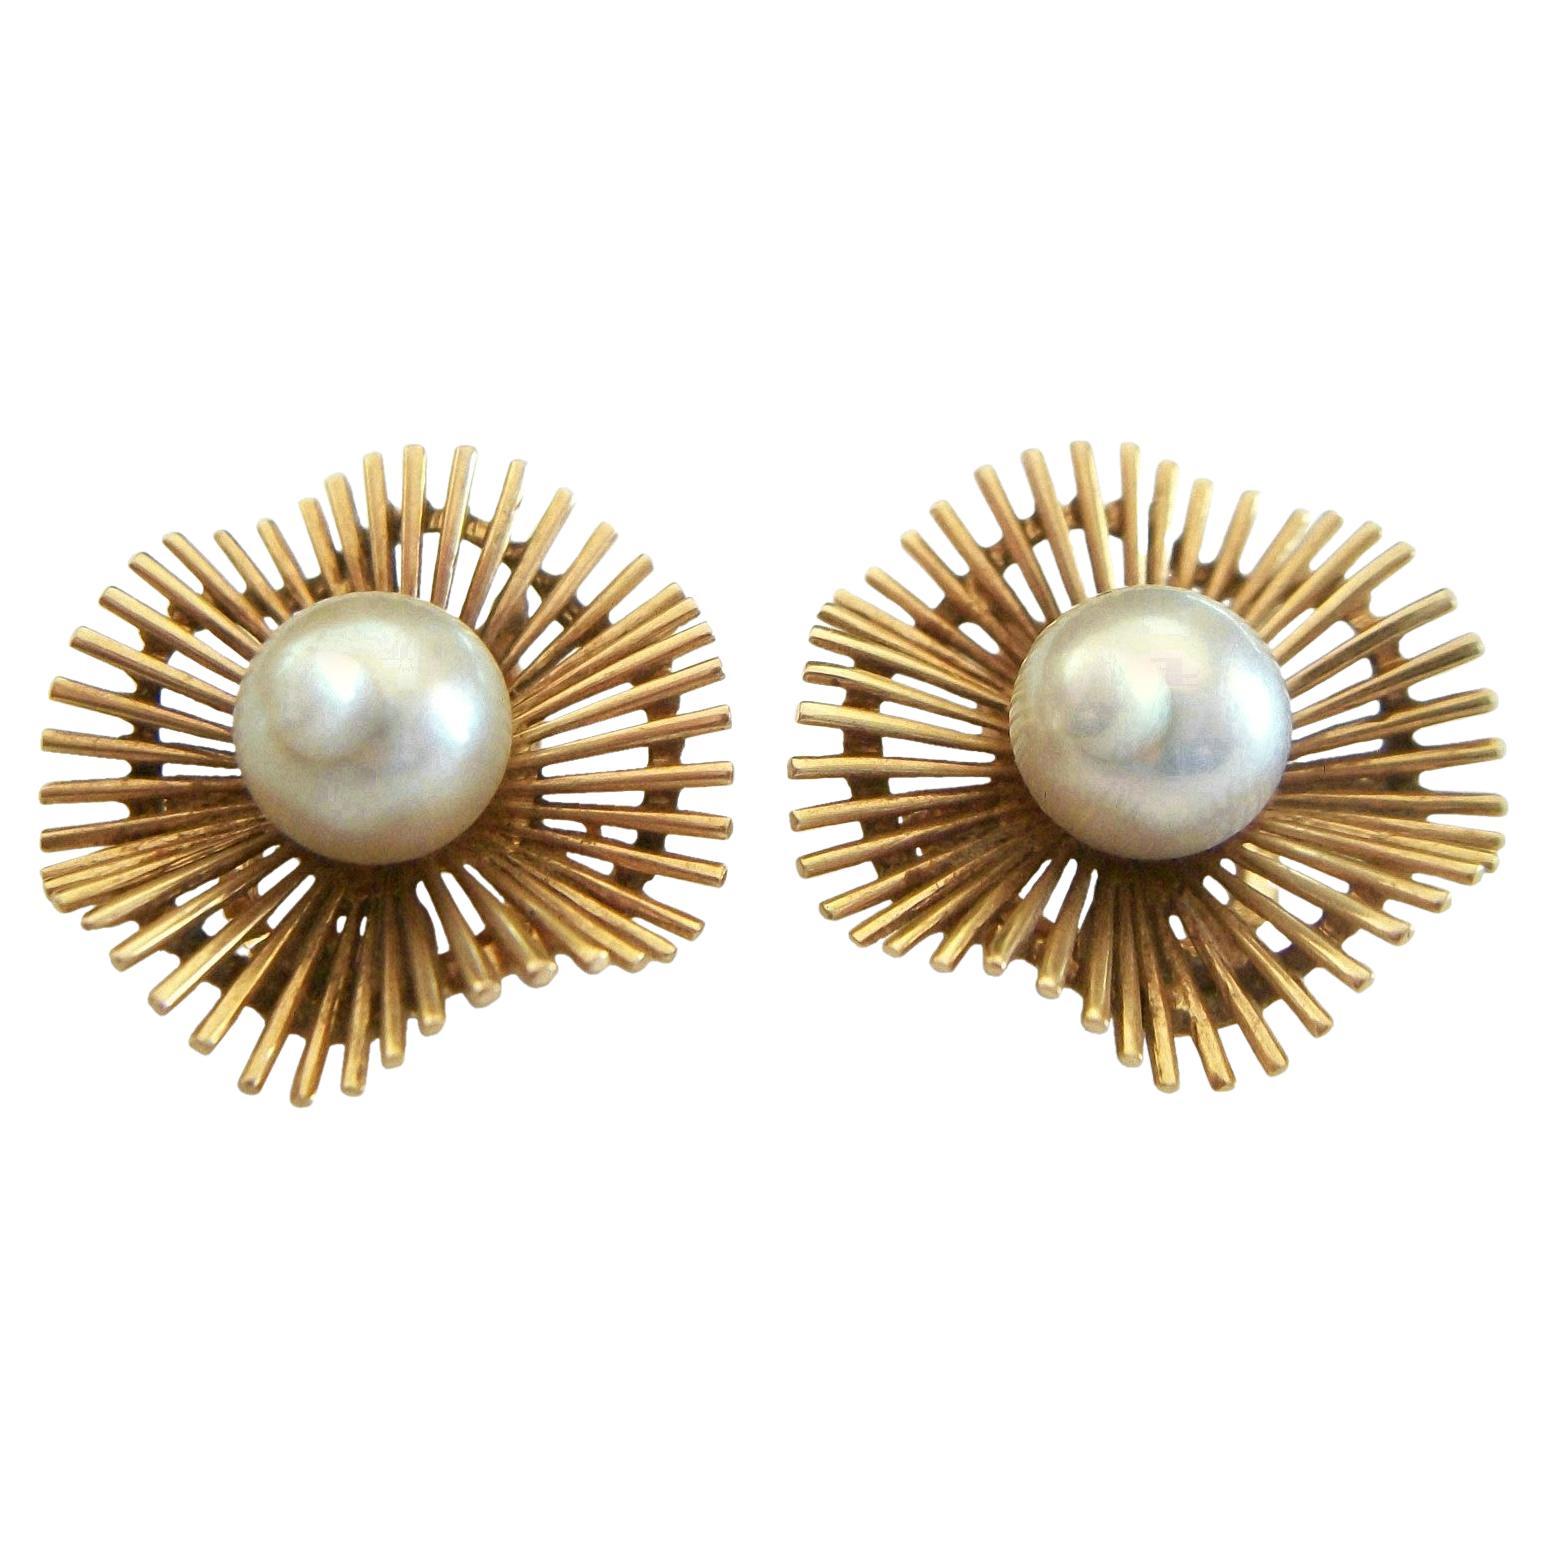 Modernist Starburst Cultured Pearl & 18k Gold Ear Clips, France, circa 1960s For Sale